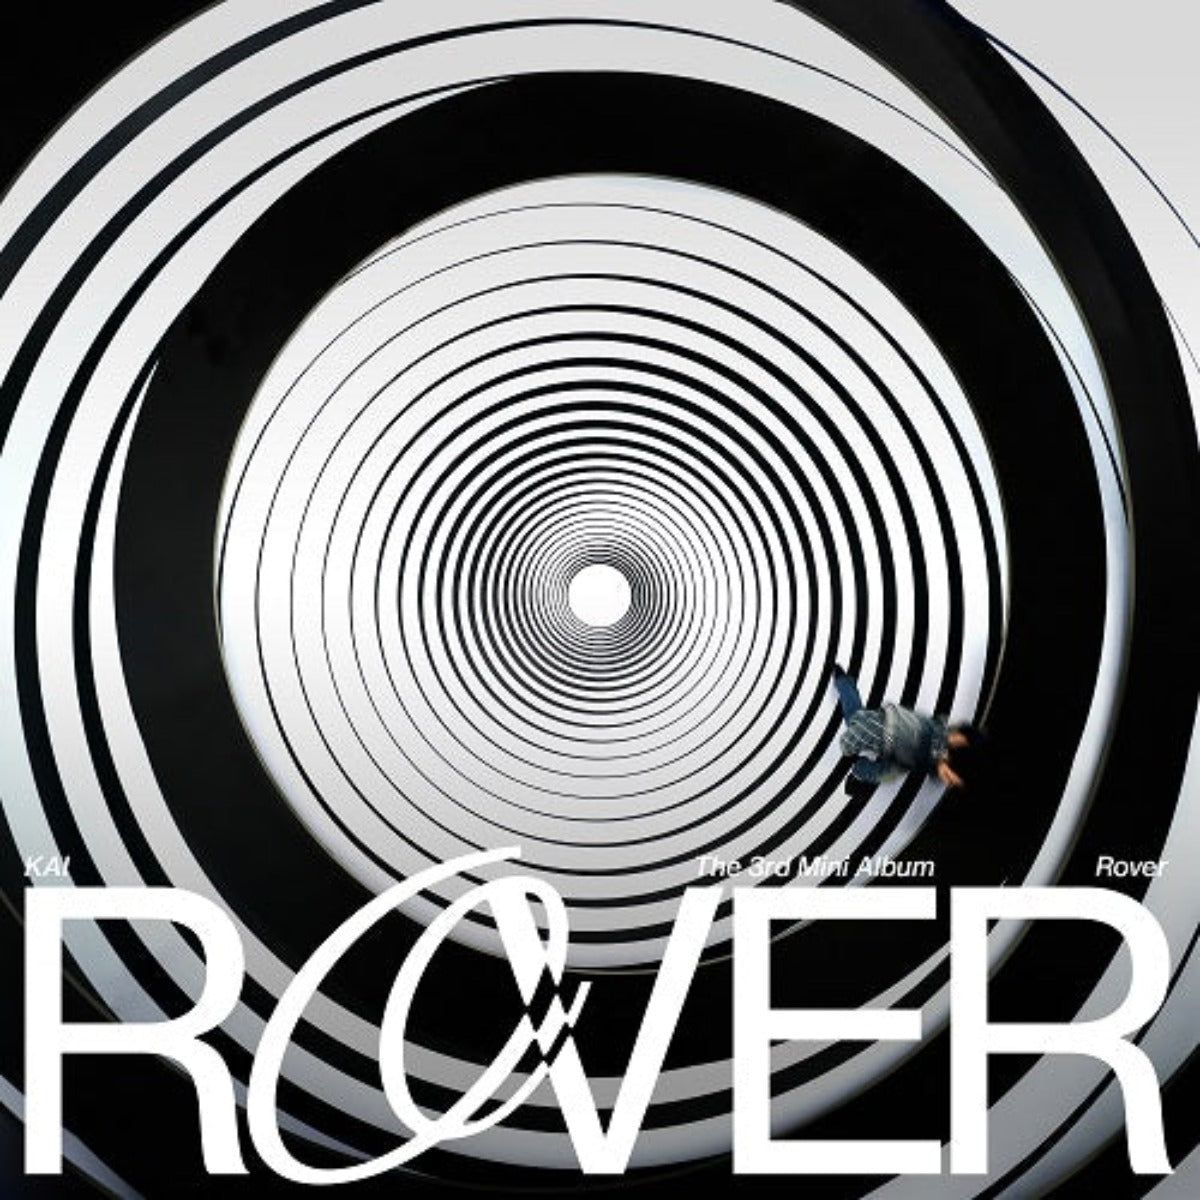 EXO: KAI Mini Album Vol. 3 - Rover (Photobook Version)